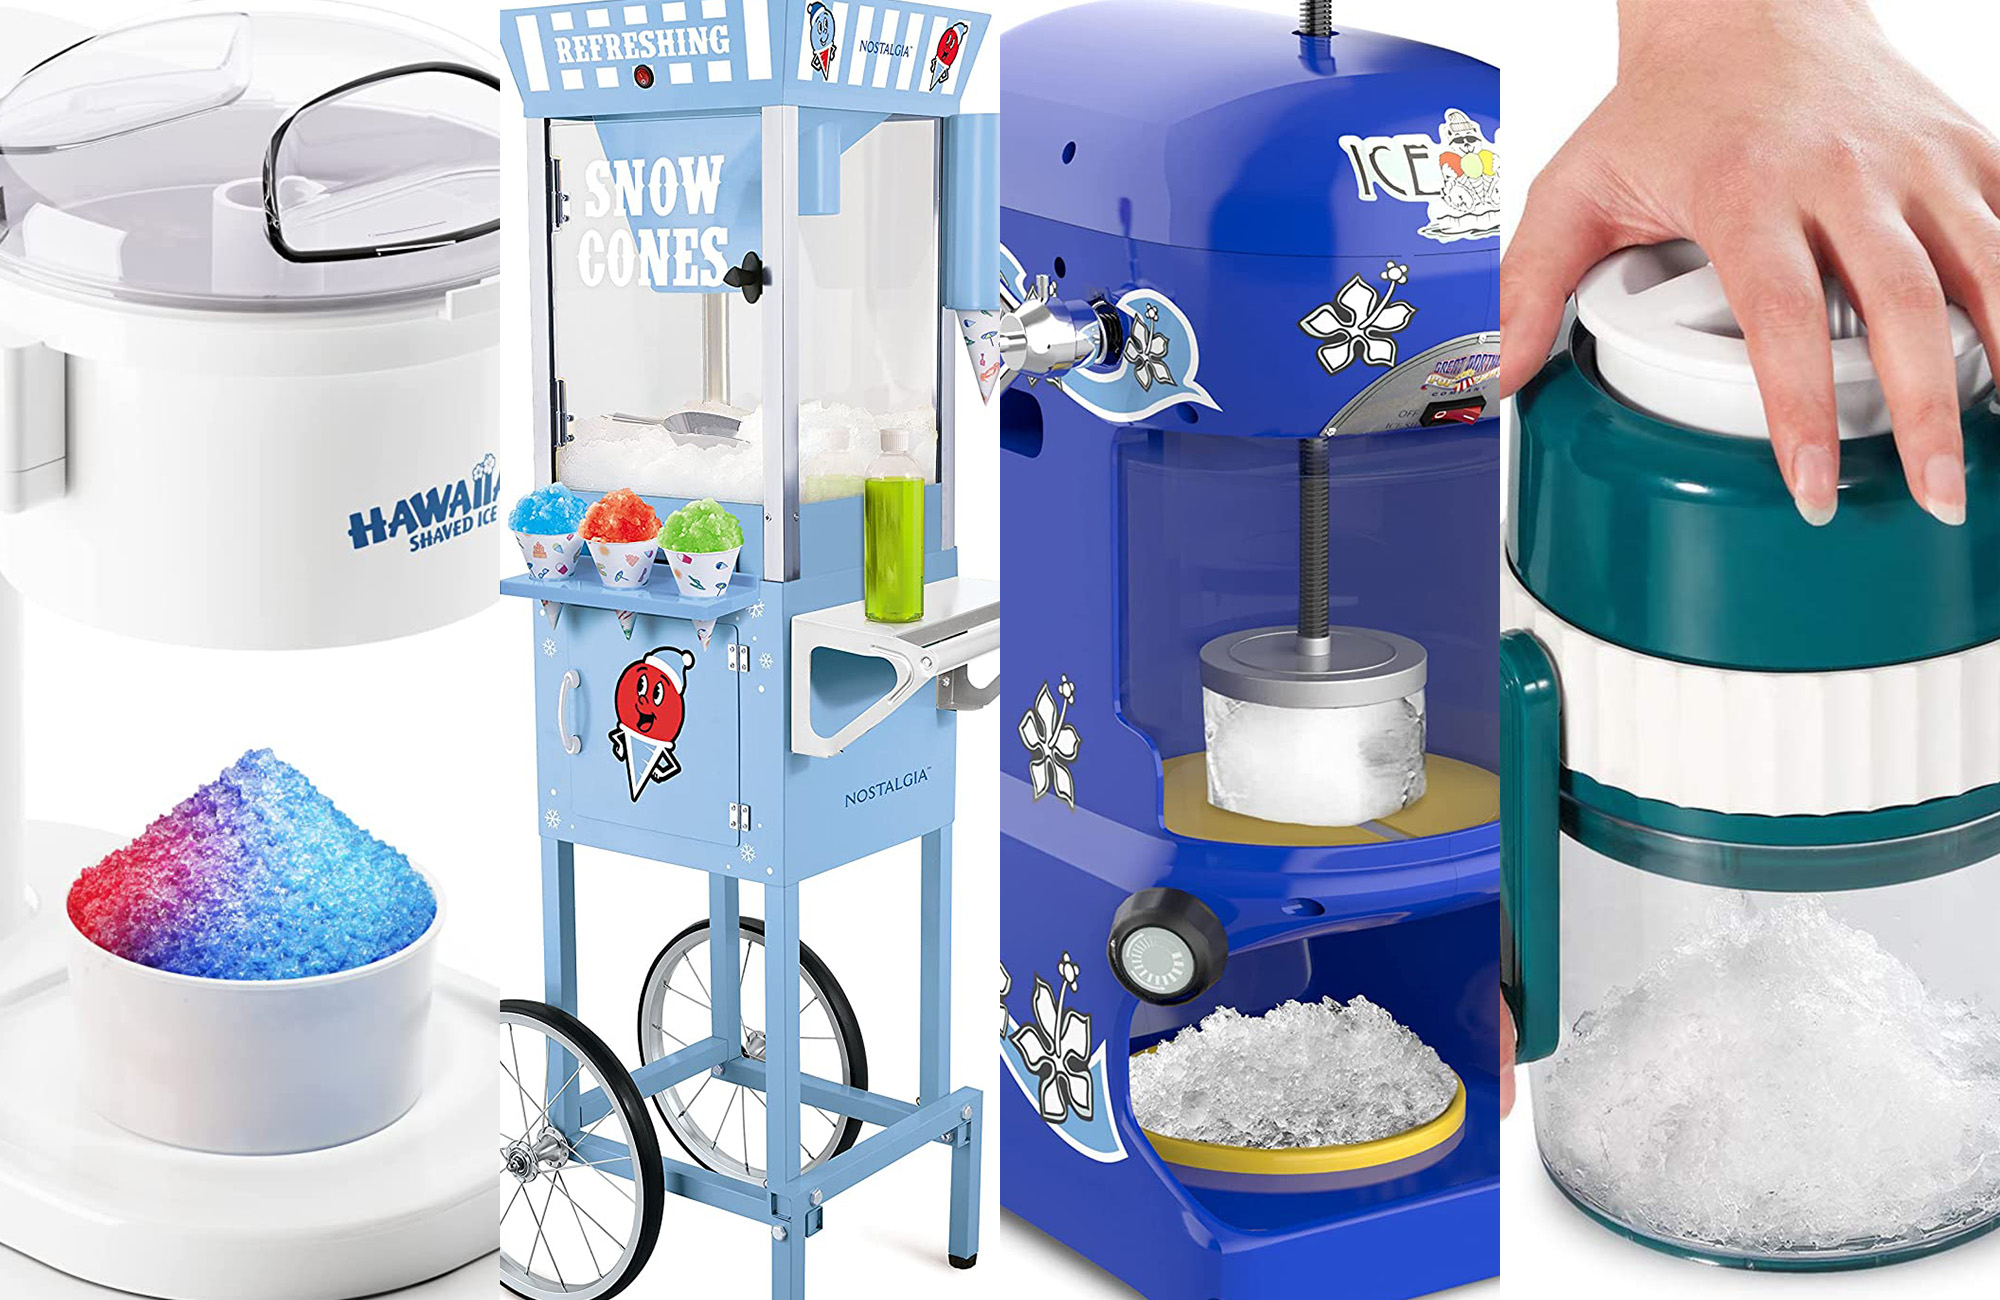 Best Rolled Ice Cream Machines - Snow Ice Supply